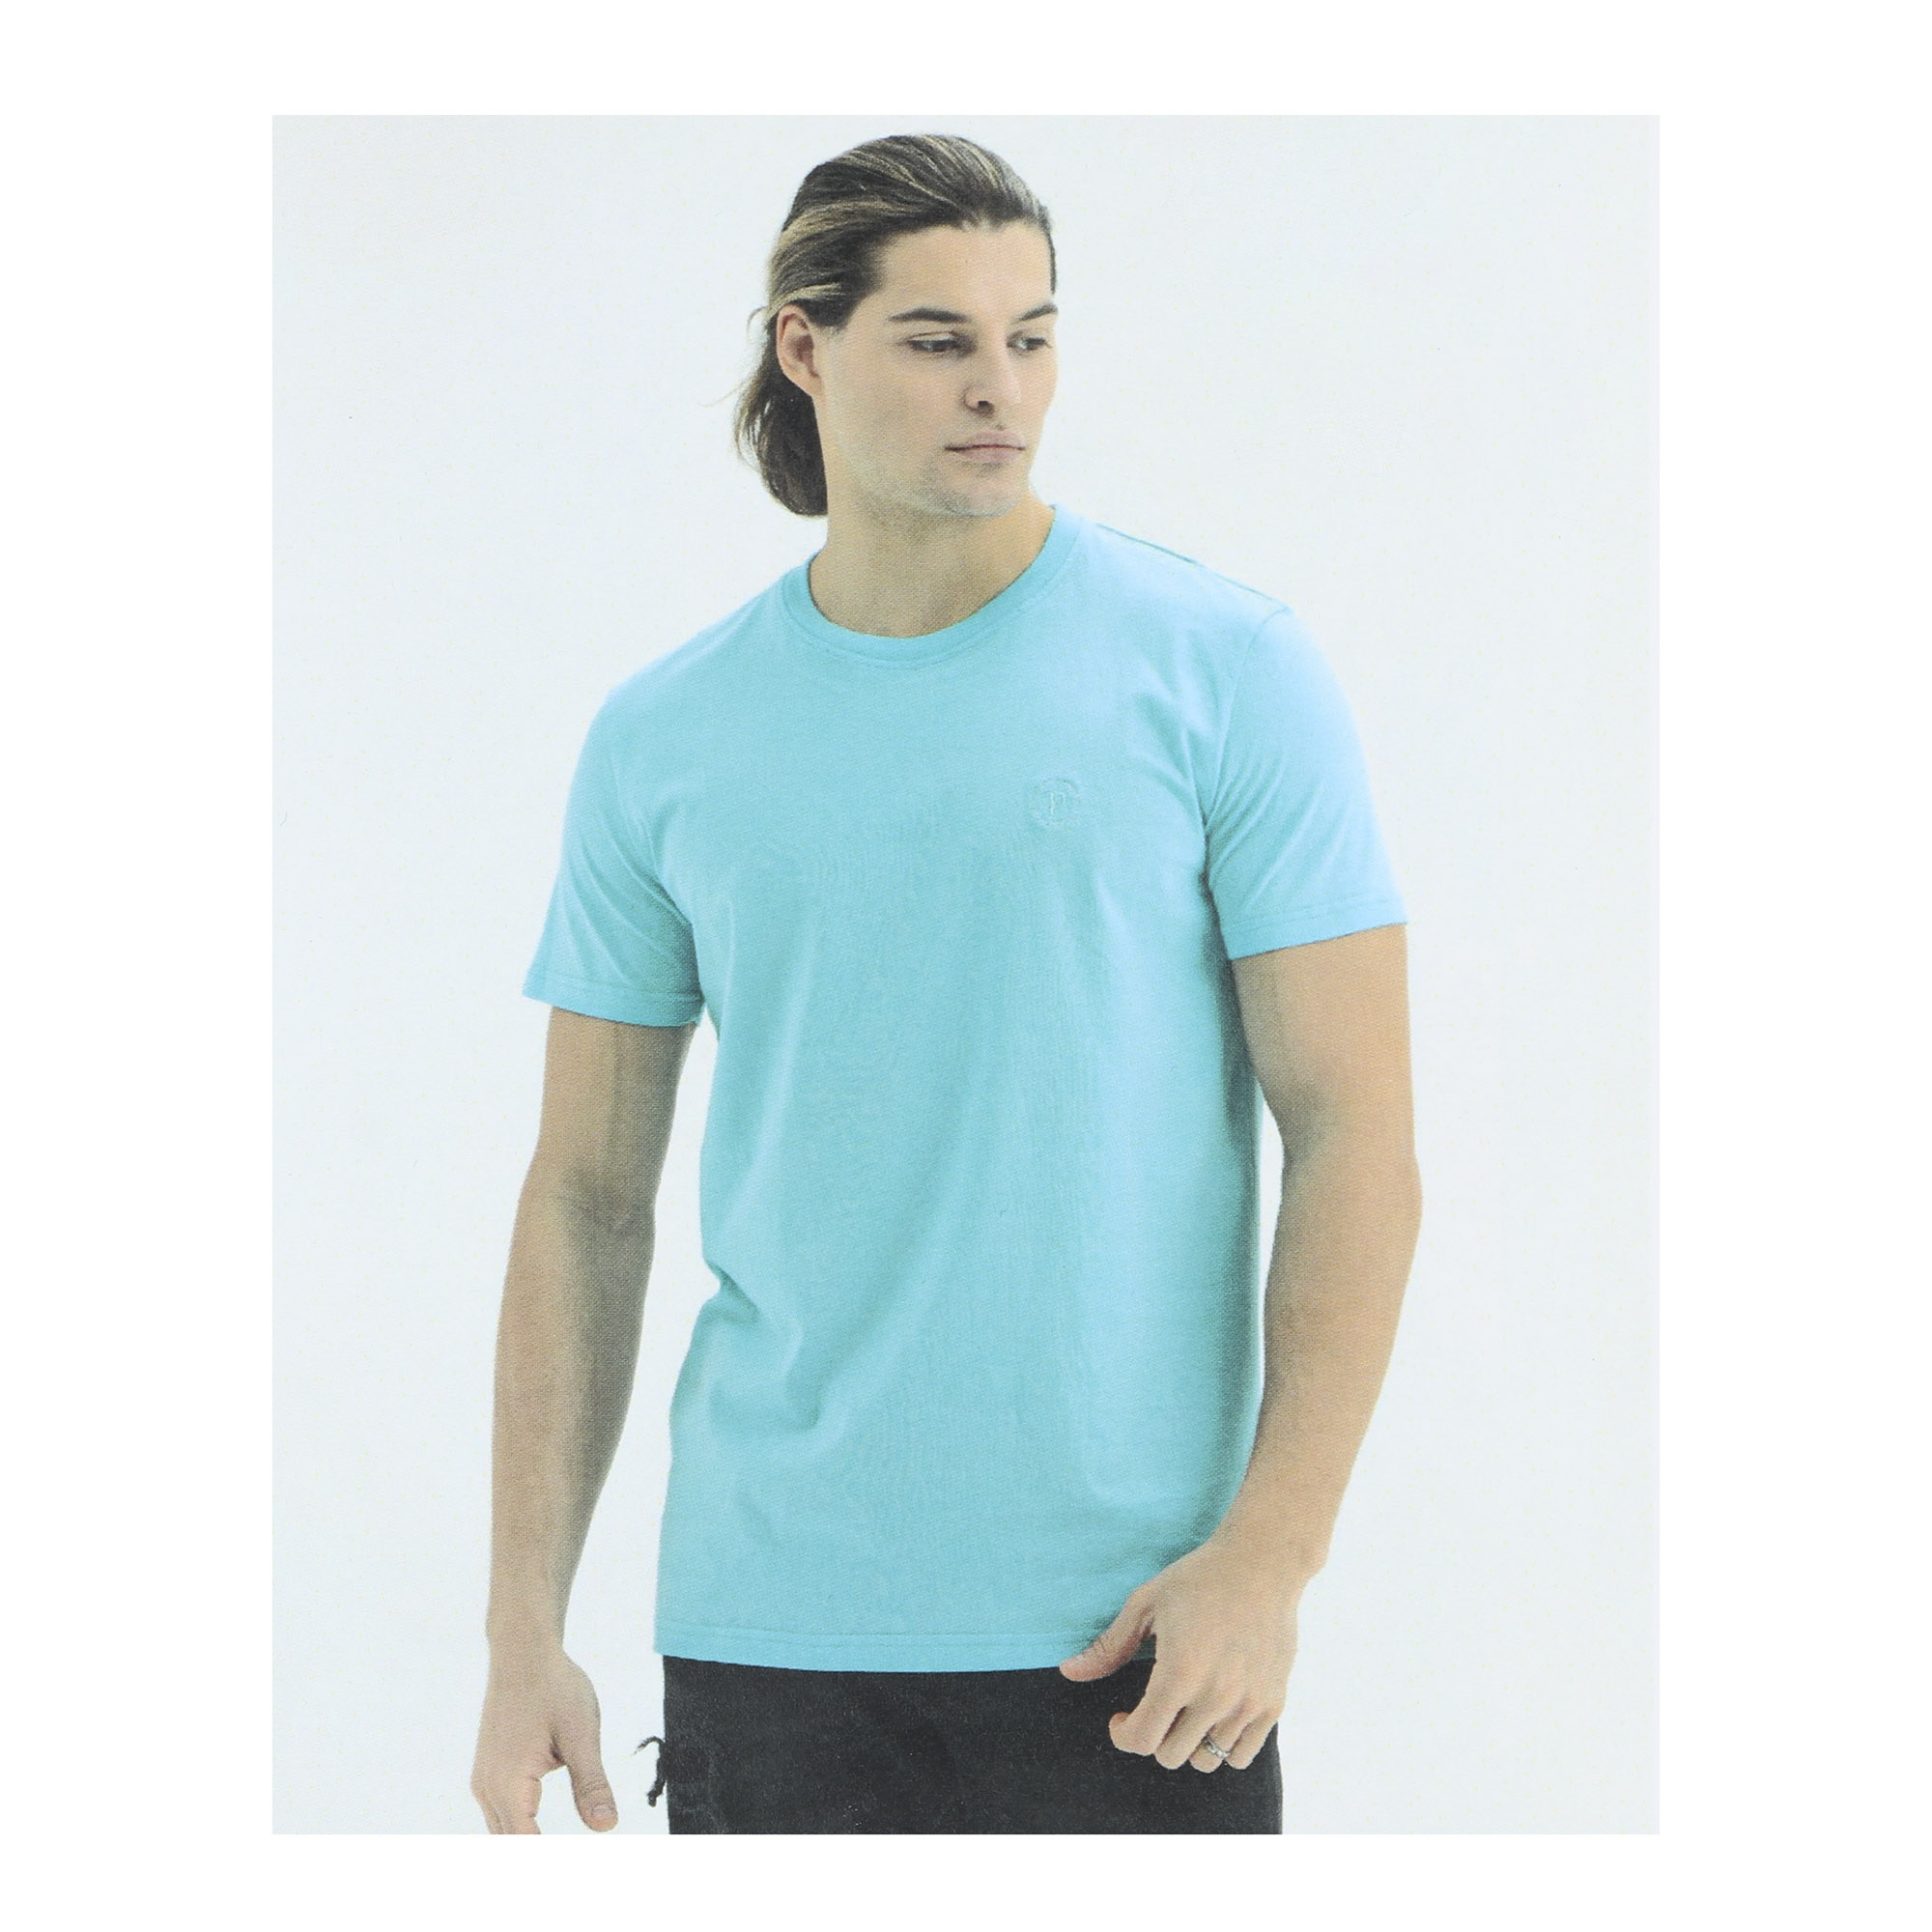 Мужская футболка Pantelemone MF-914 48 ментоловая, цвет ментоловый, размер 48 - фото 4